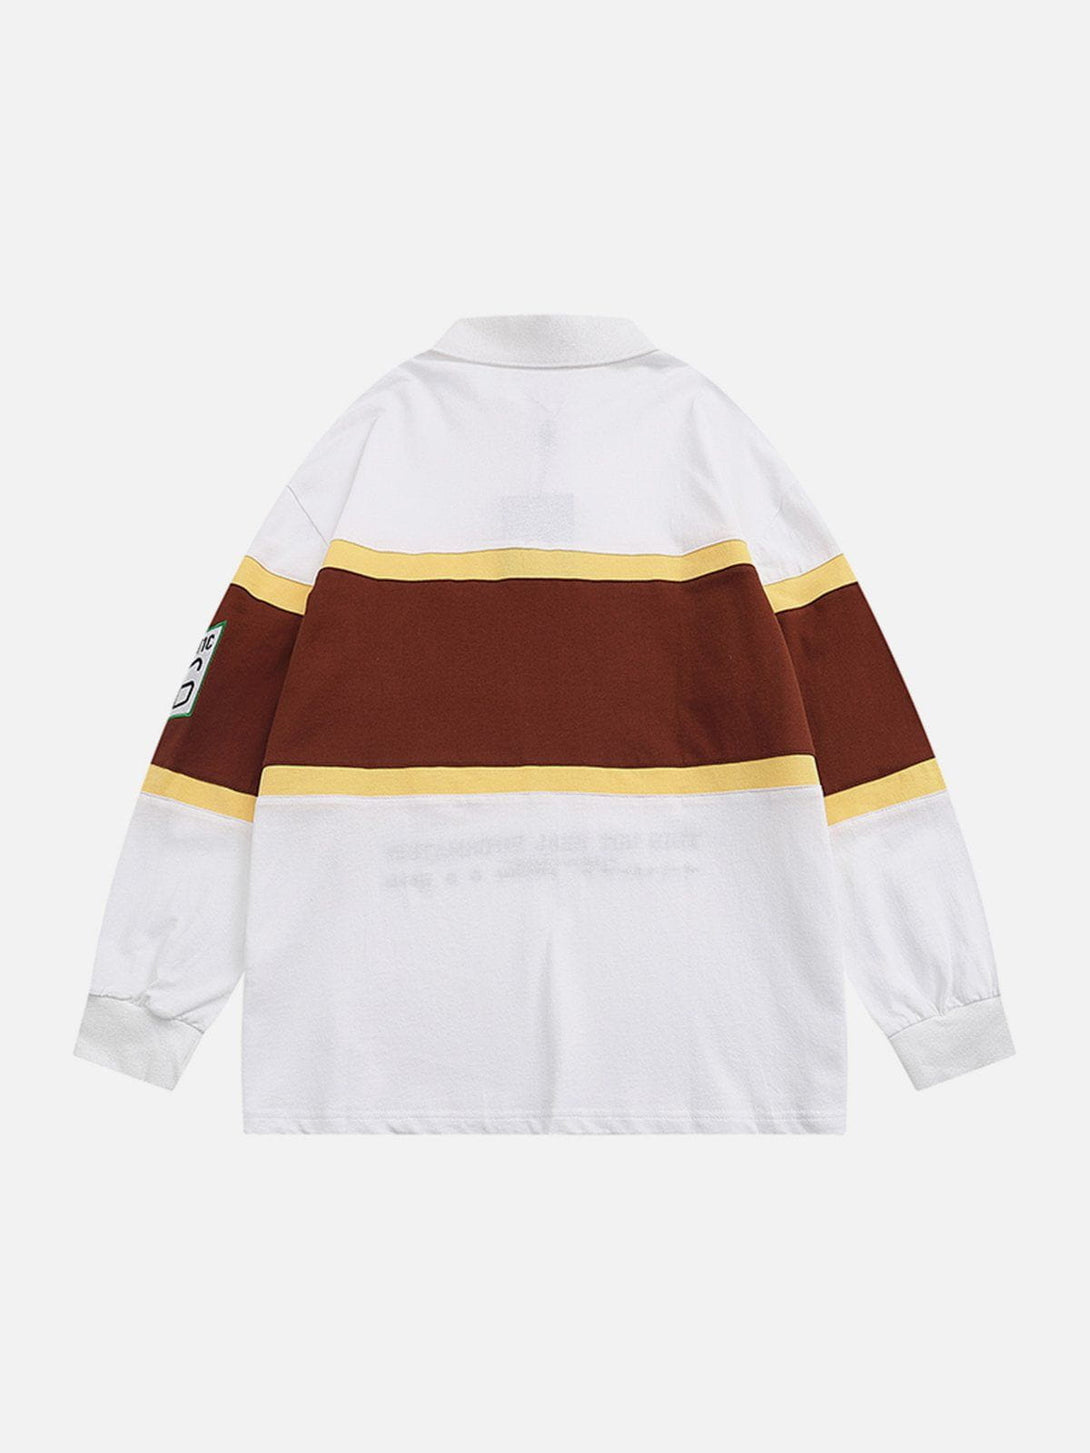 Levefly - "1973" Polo Sweatshirt - Streetwear Fashion - levefly.com